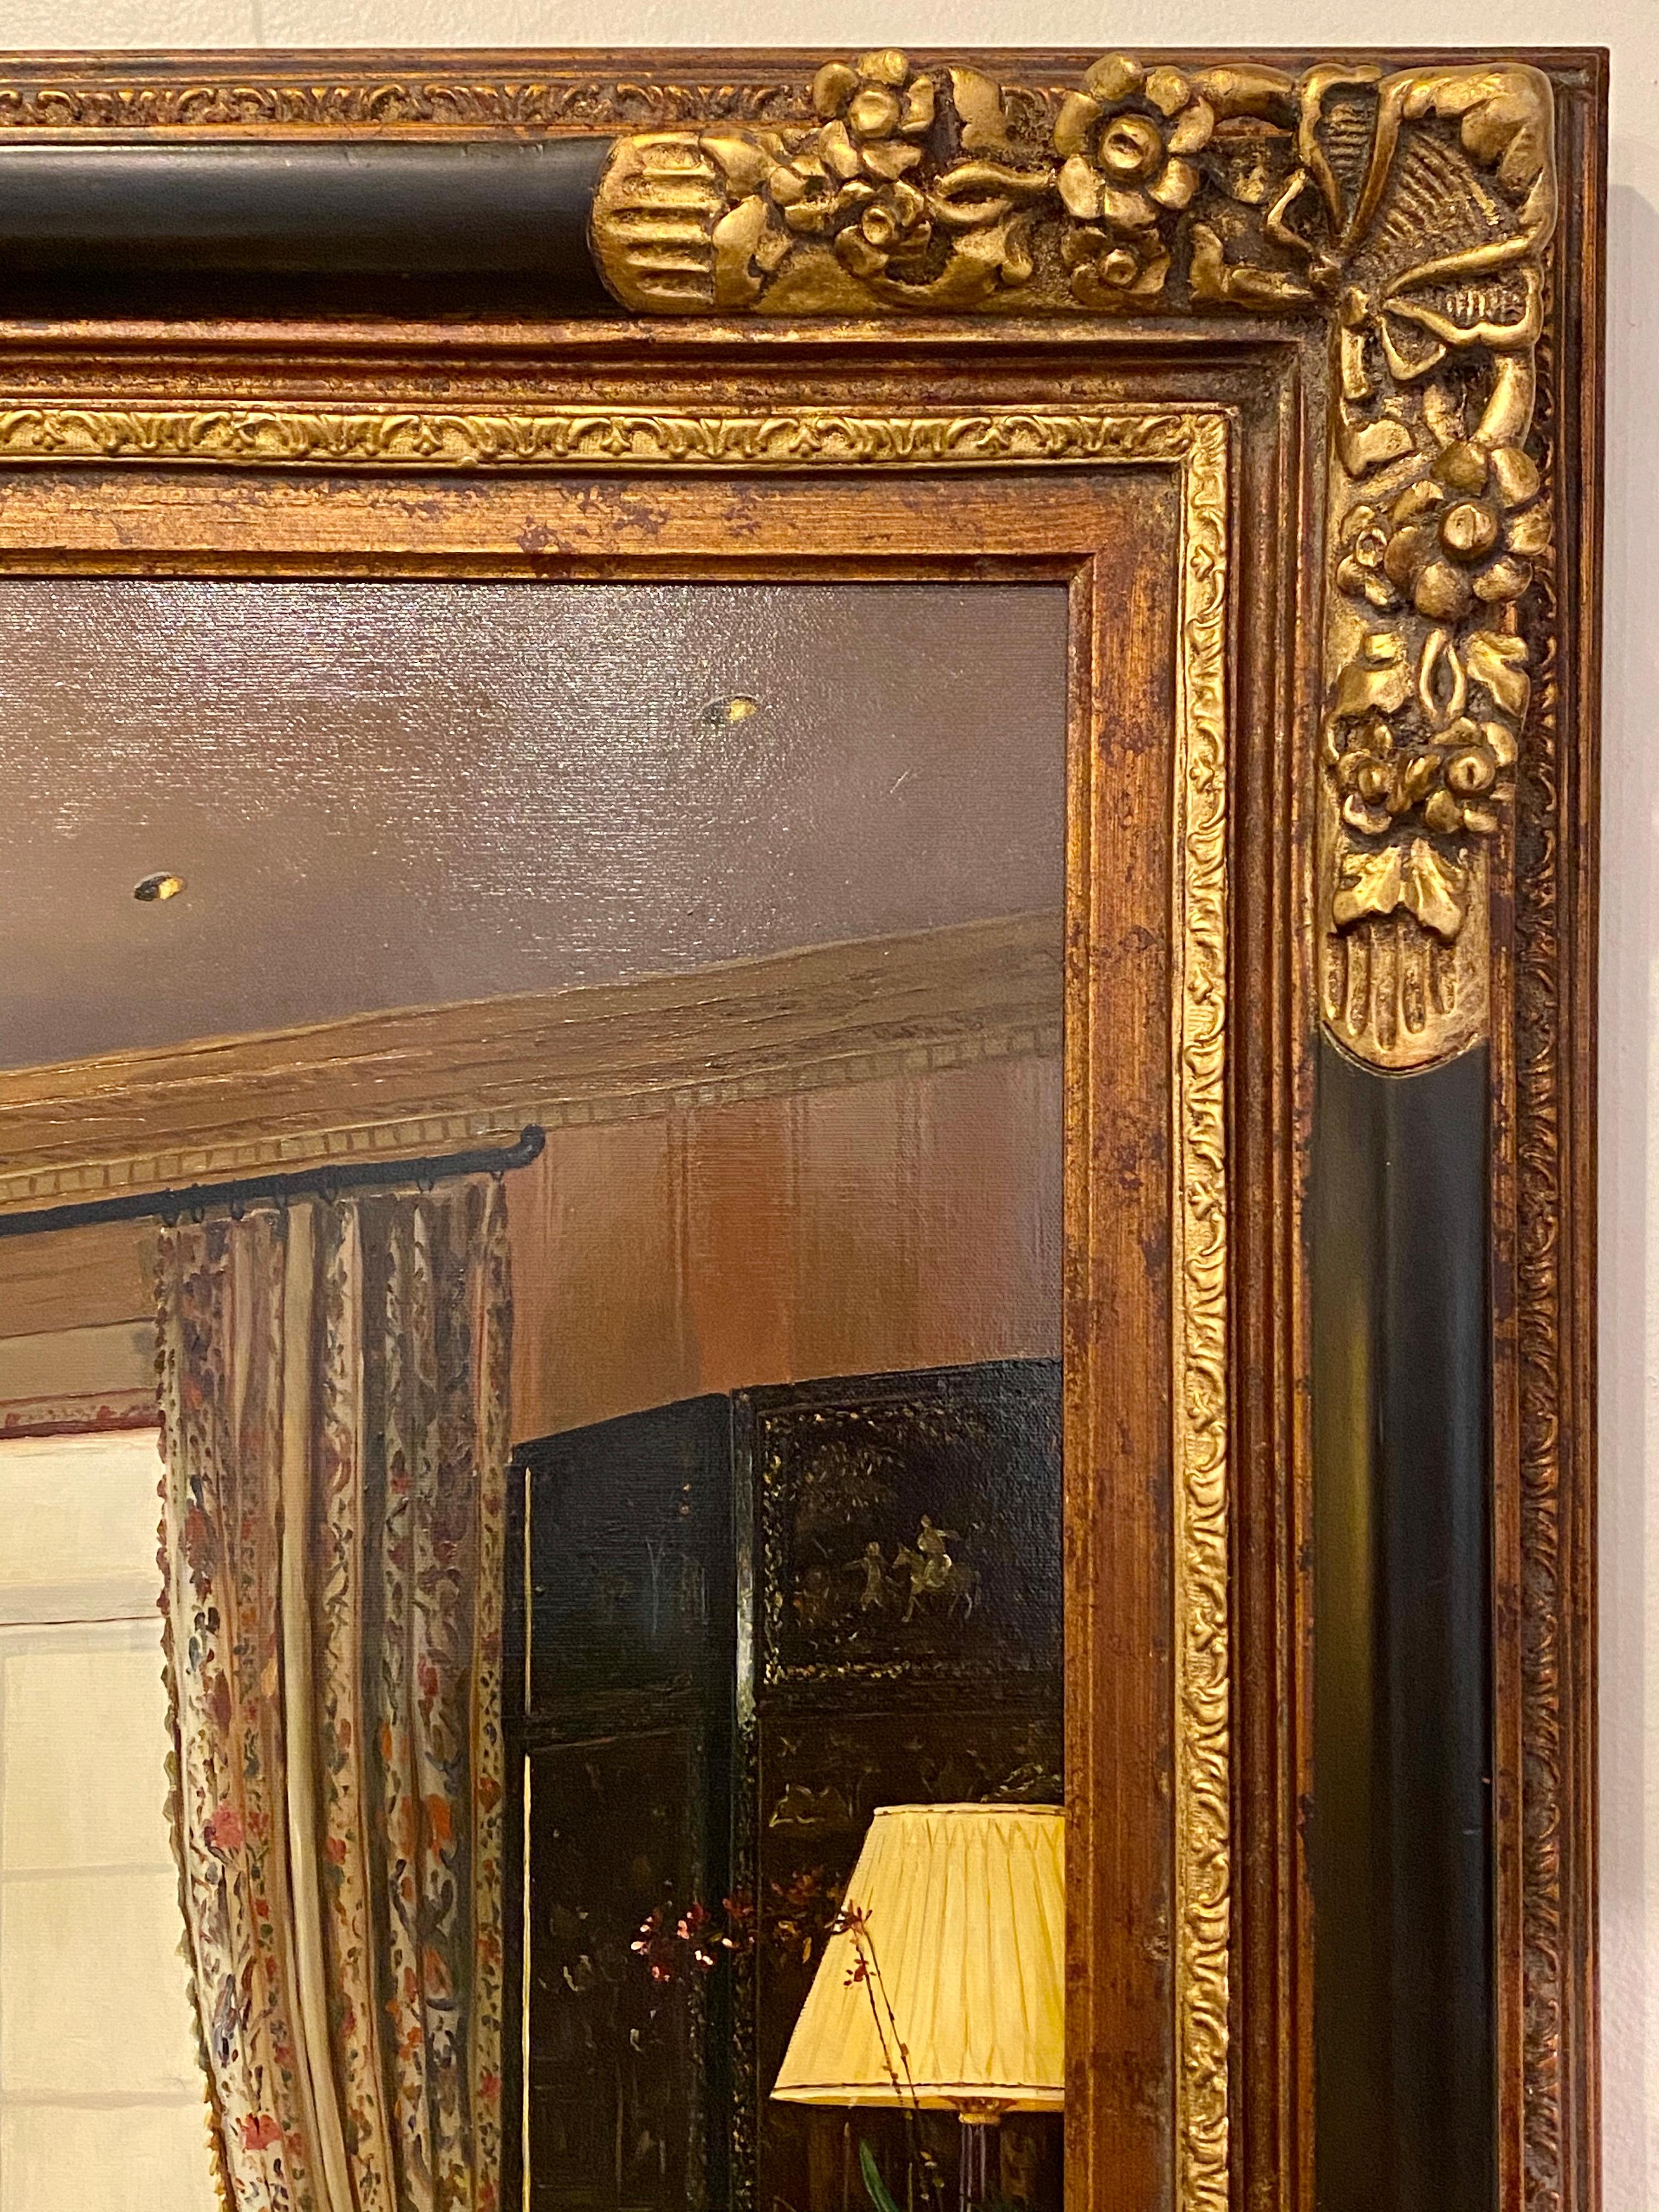 Wood Oil on Canvas Interior Home Design in a Custom Frame, Signed Feldman